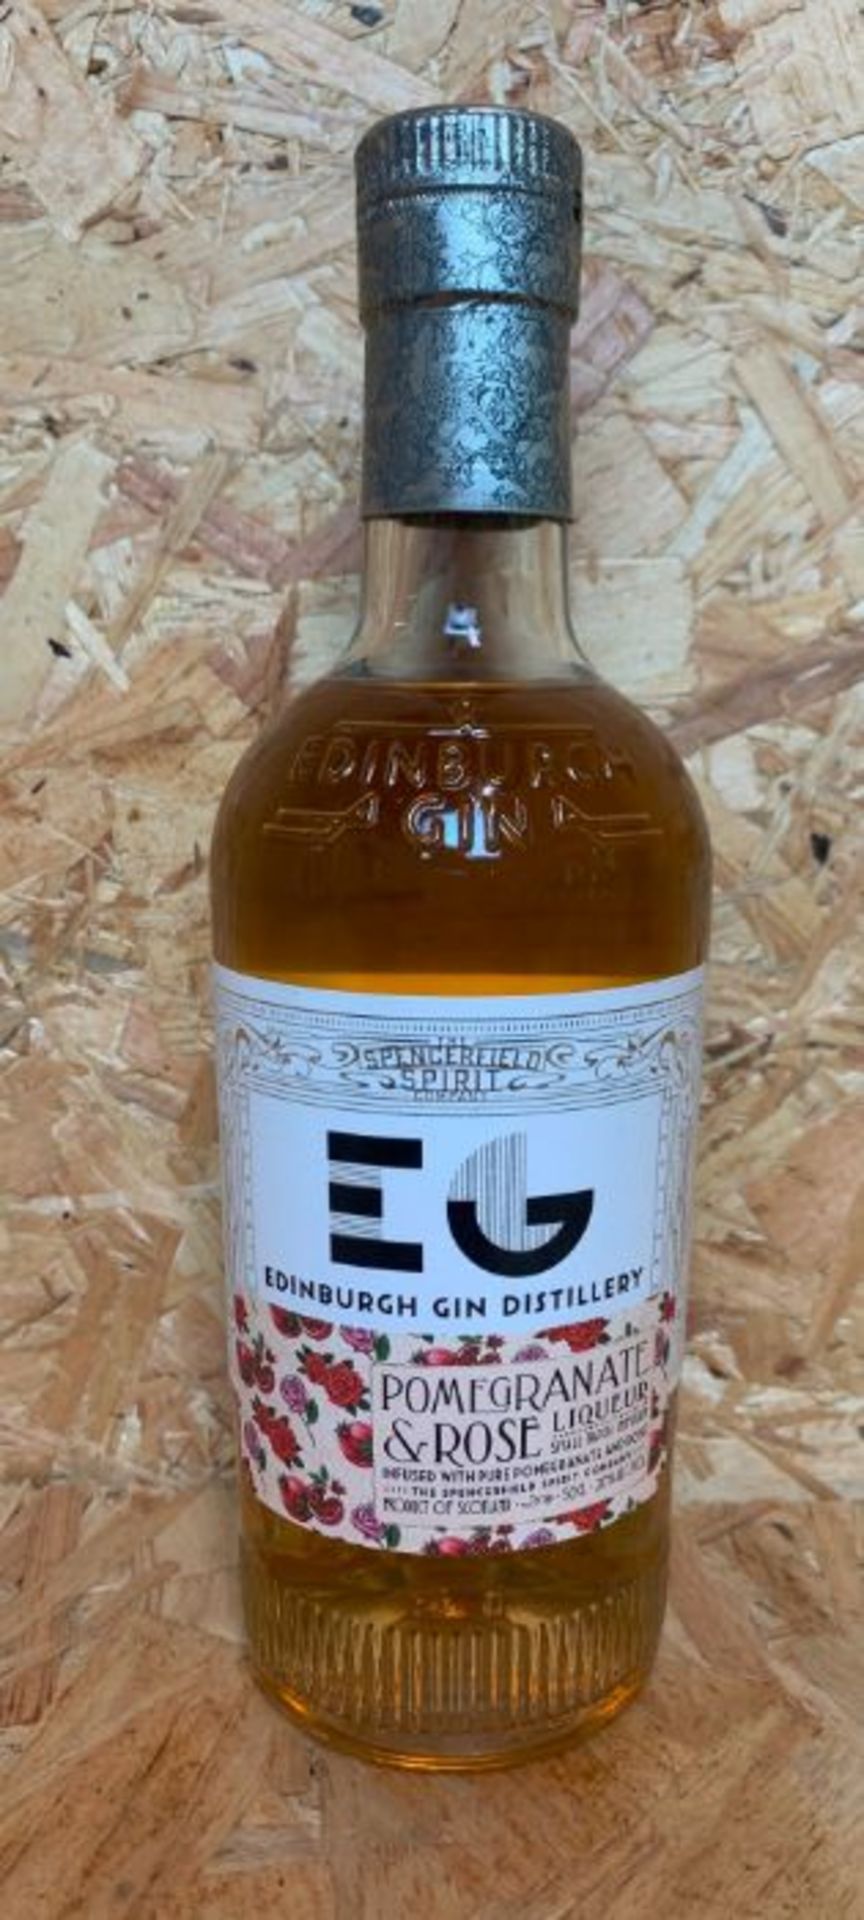 EDINBURGH GIN DISTILLERY POMEGRANATE & ROSE LIQUEUR - 50CL - RRP £16.50